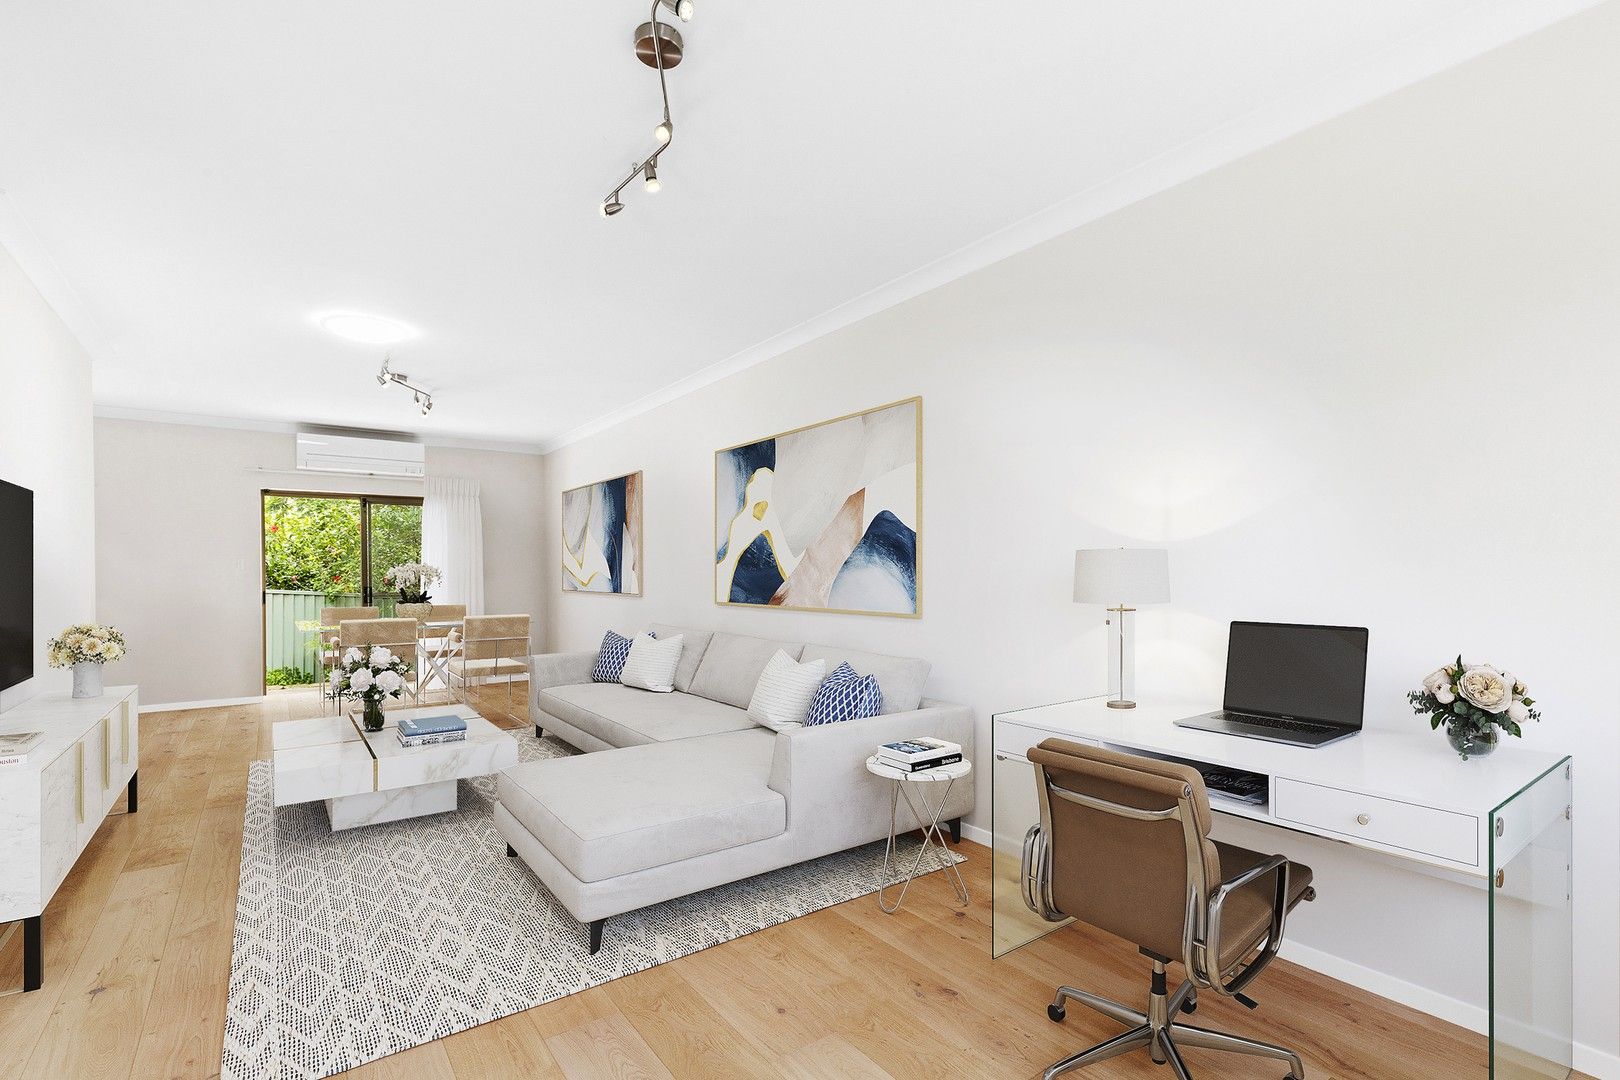 3 bedrooms Villa in 6/45-47 Mons Avenue WEST RYDE NSW, 2114